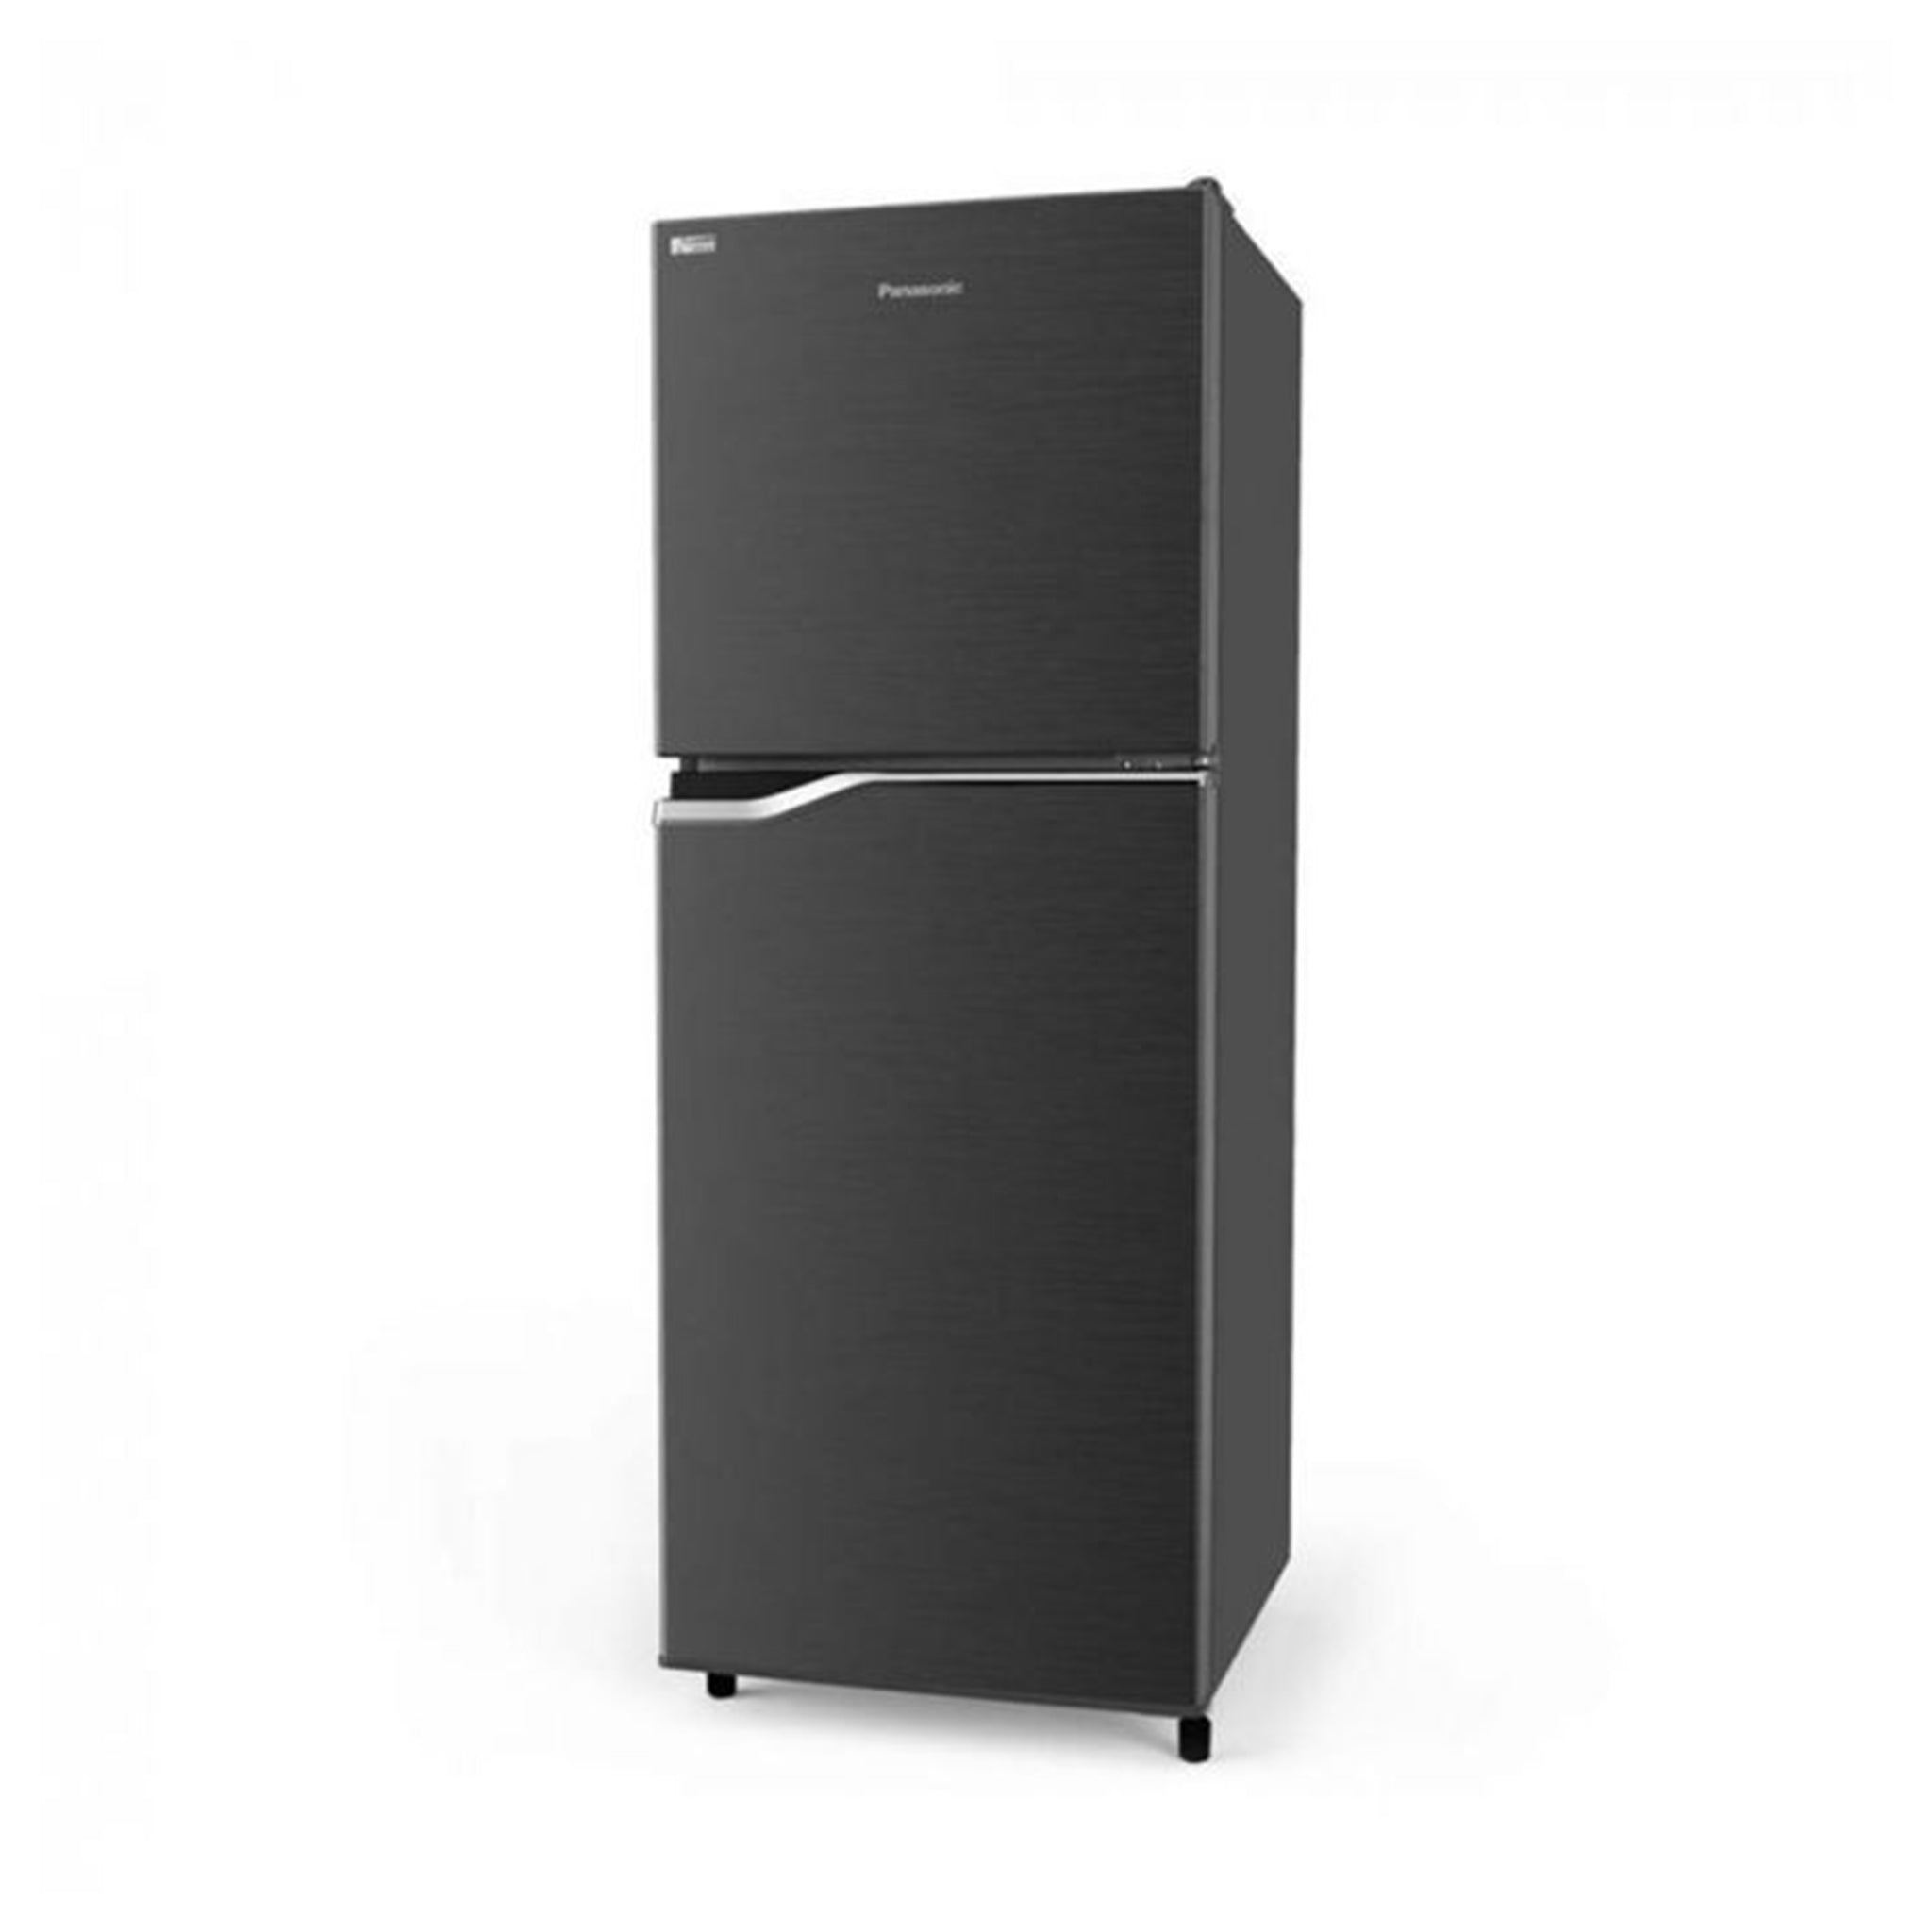 PANASONIC NR-BP230VD 2-Door Top Freezer Fridge No Frost Inverter Refrigerator Panasonic